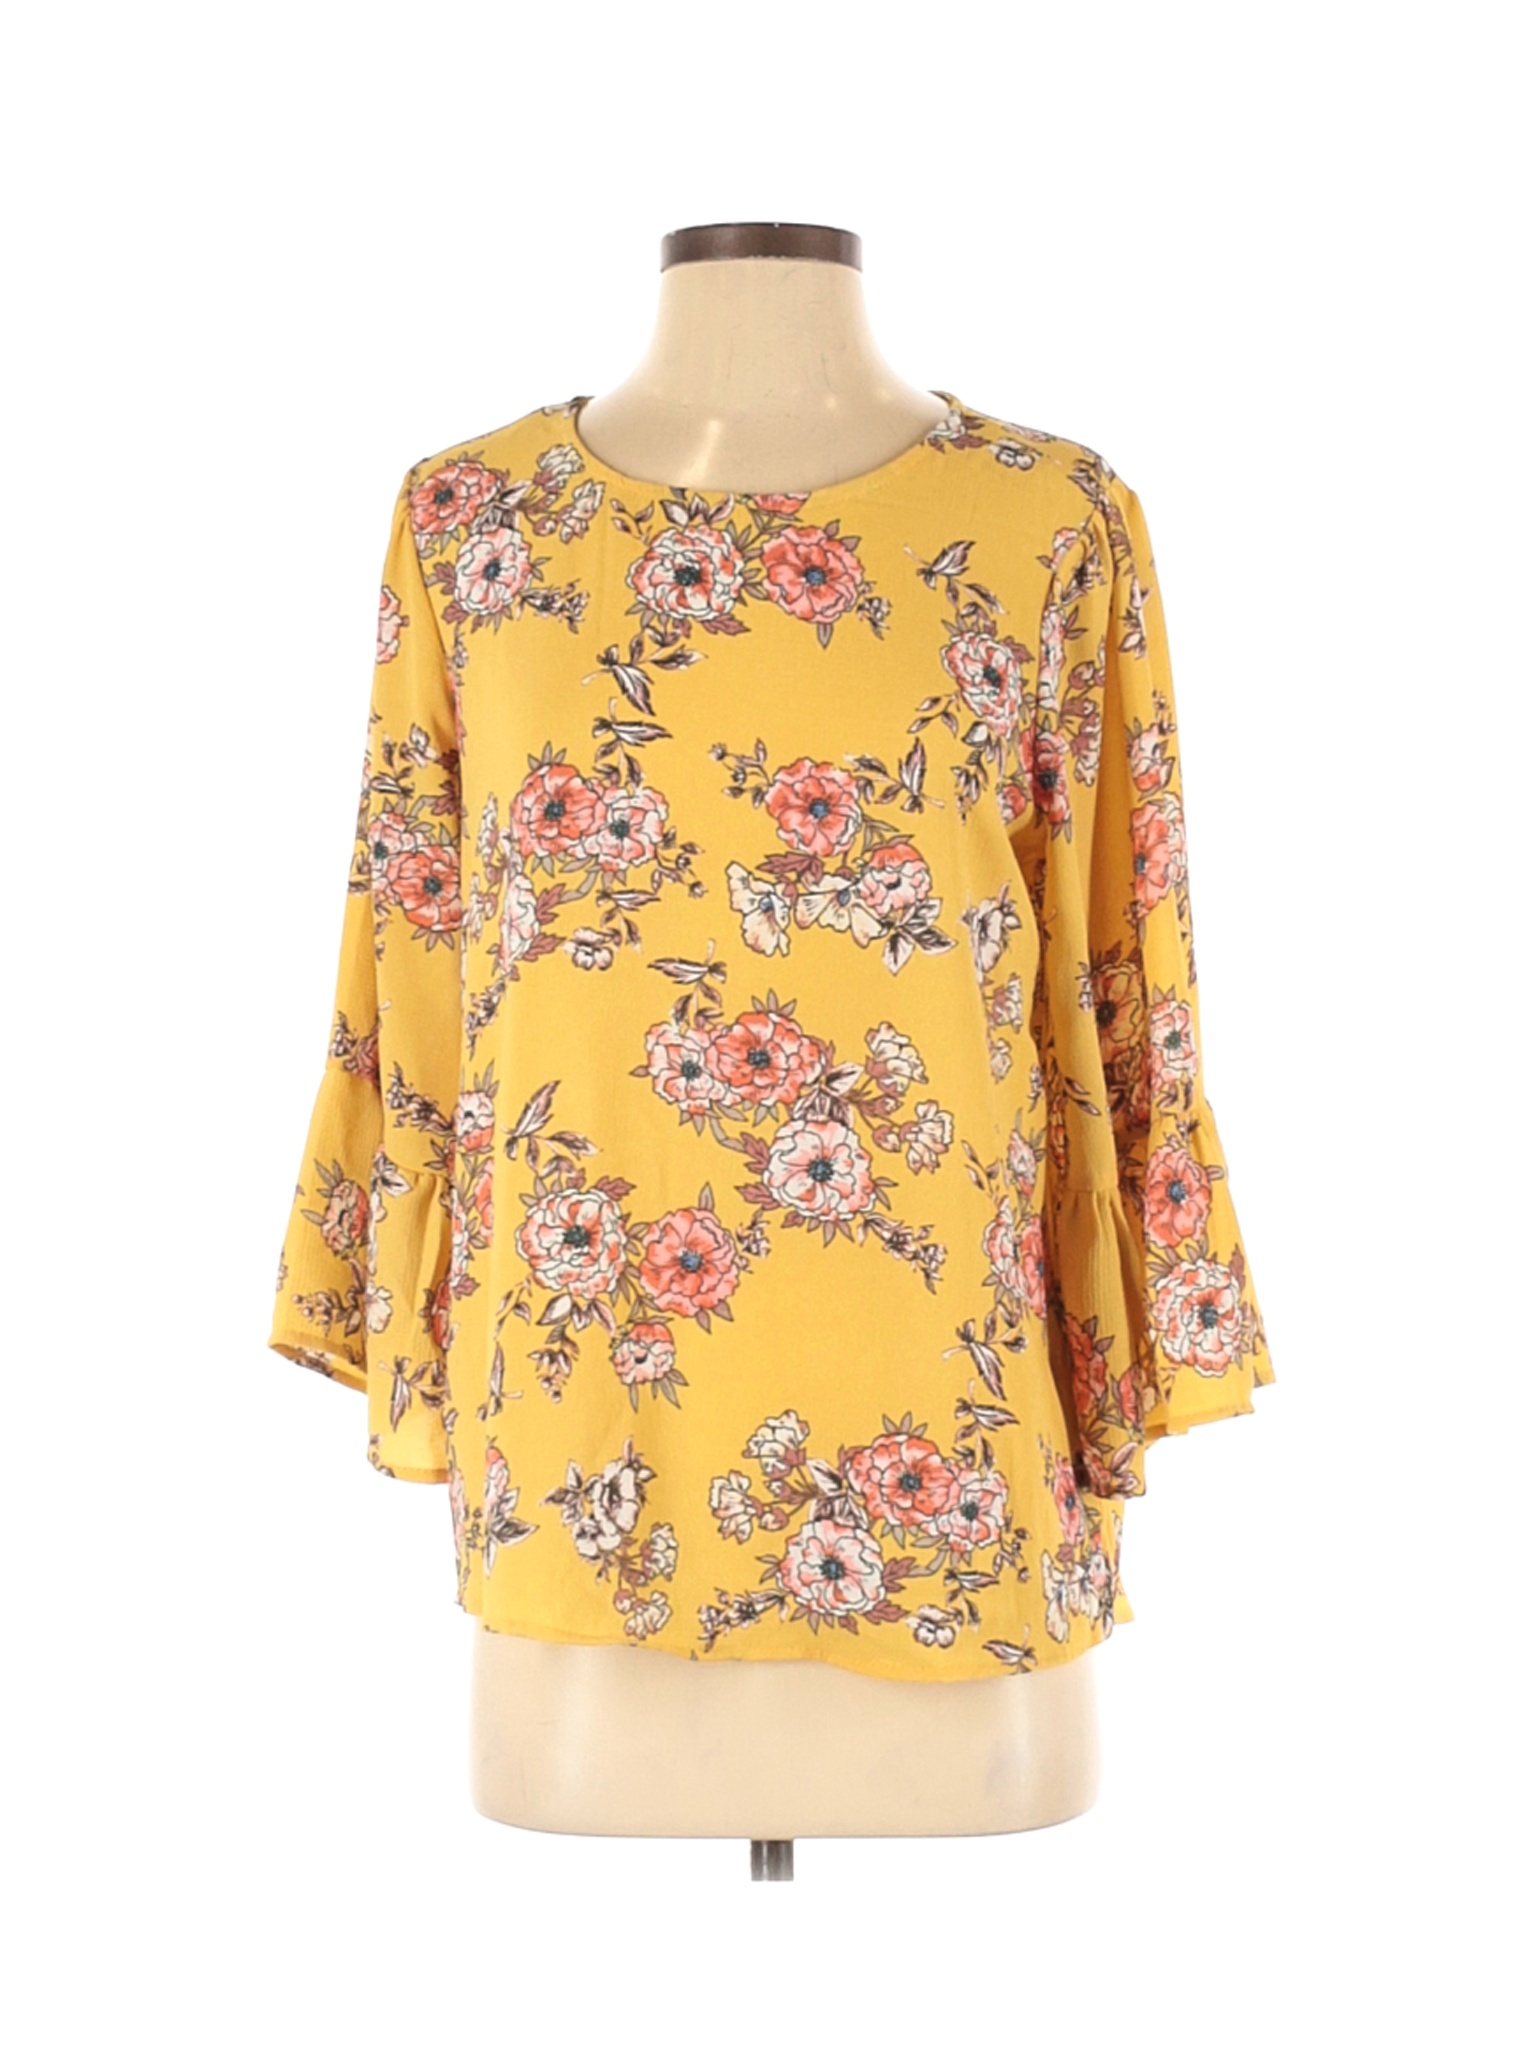 AUW Women Yellow 3/4 Sleeve Blouse S | eBay